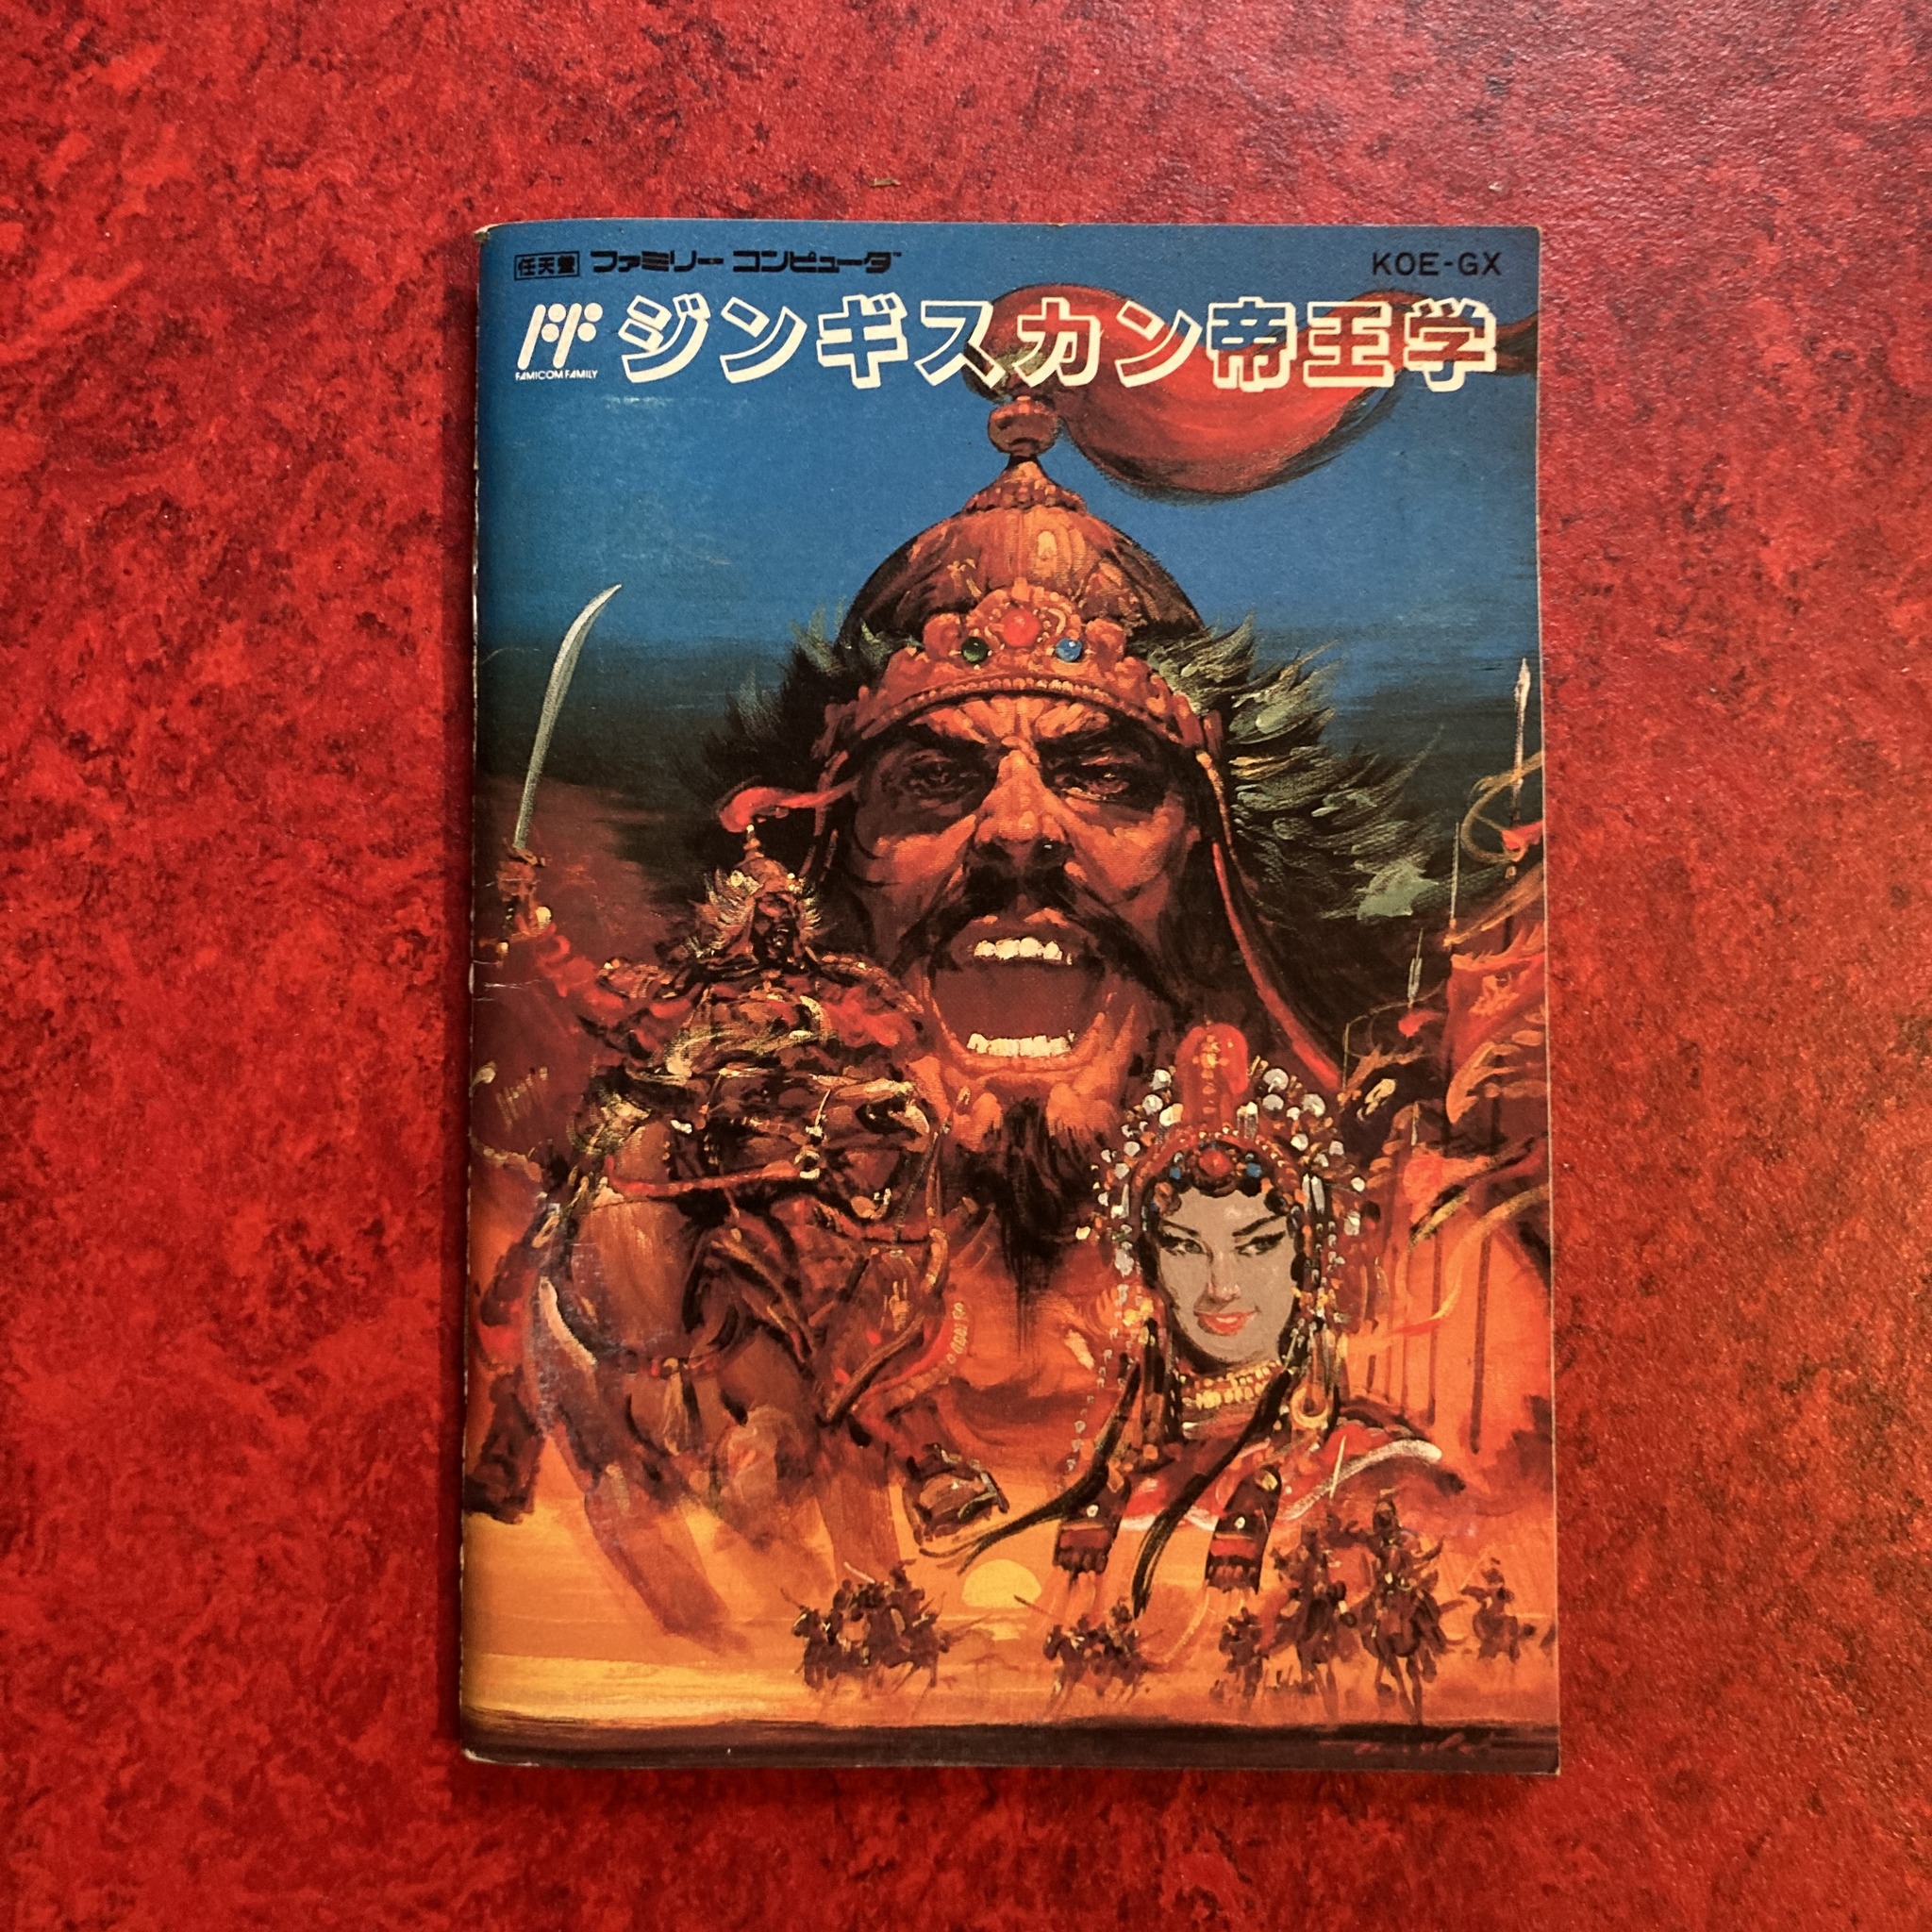 Aoki Ōkami to Shiroki Mejika: Genghis Khan / Genghis Khan (PC-9801, MSX, PC, NES, Amiga)